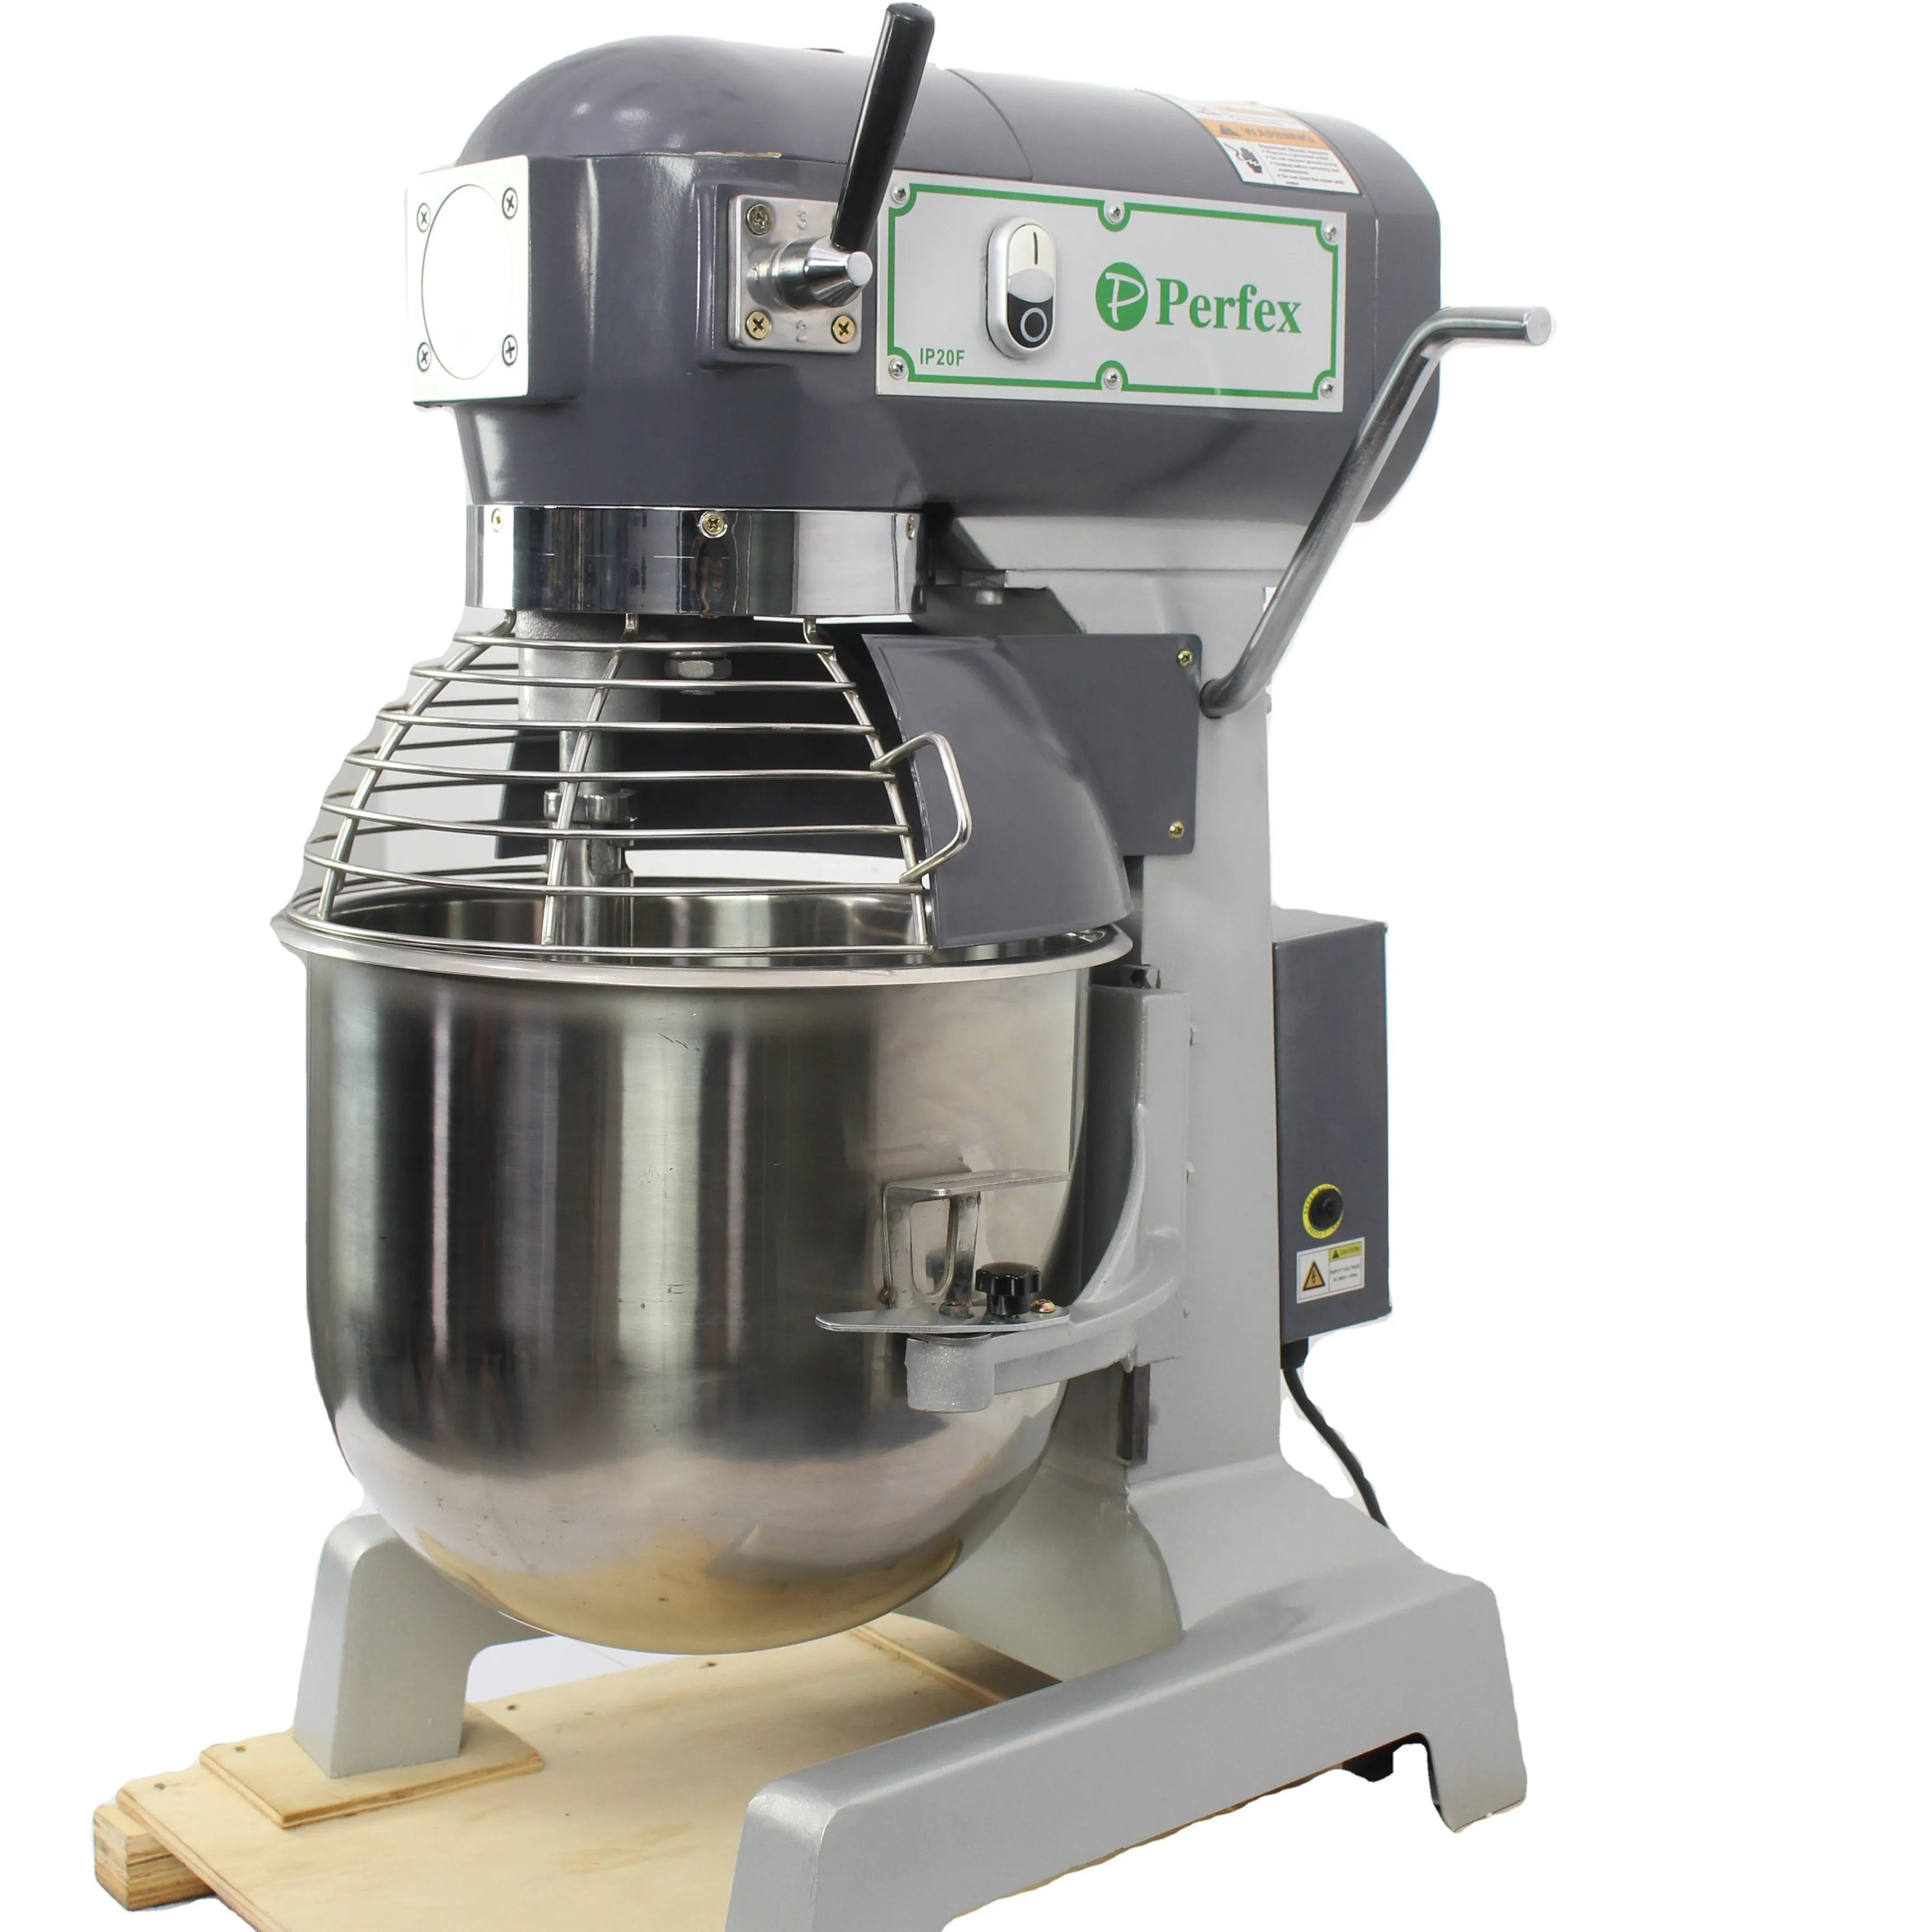 B10 powder mixer machine stand food mixer for kitchen commercial spiral mixer machine bakery using egg beat